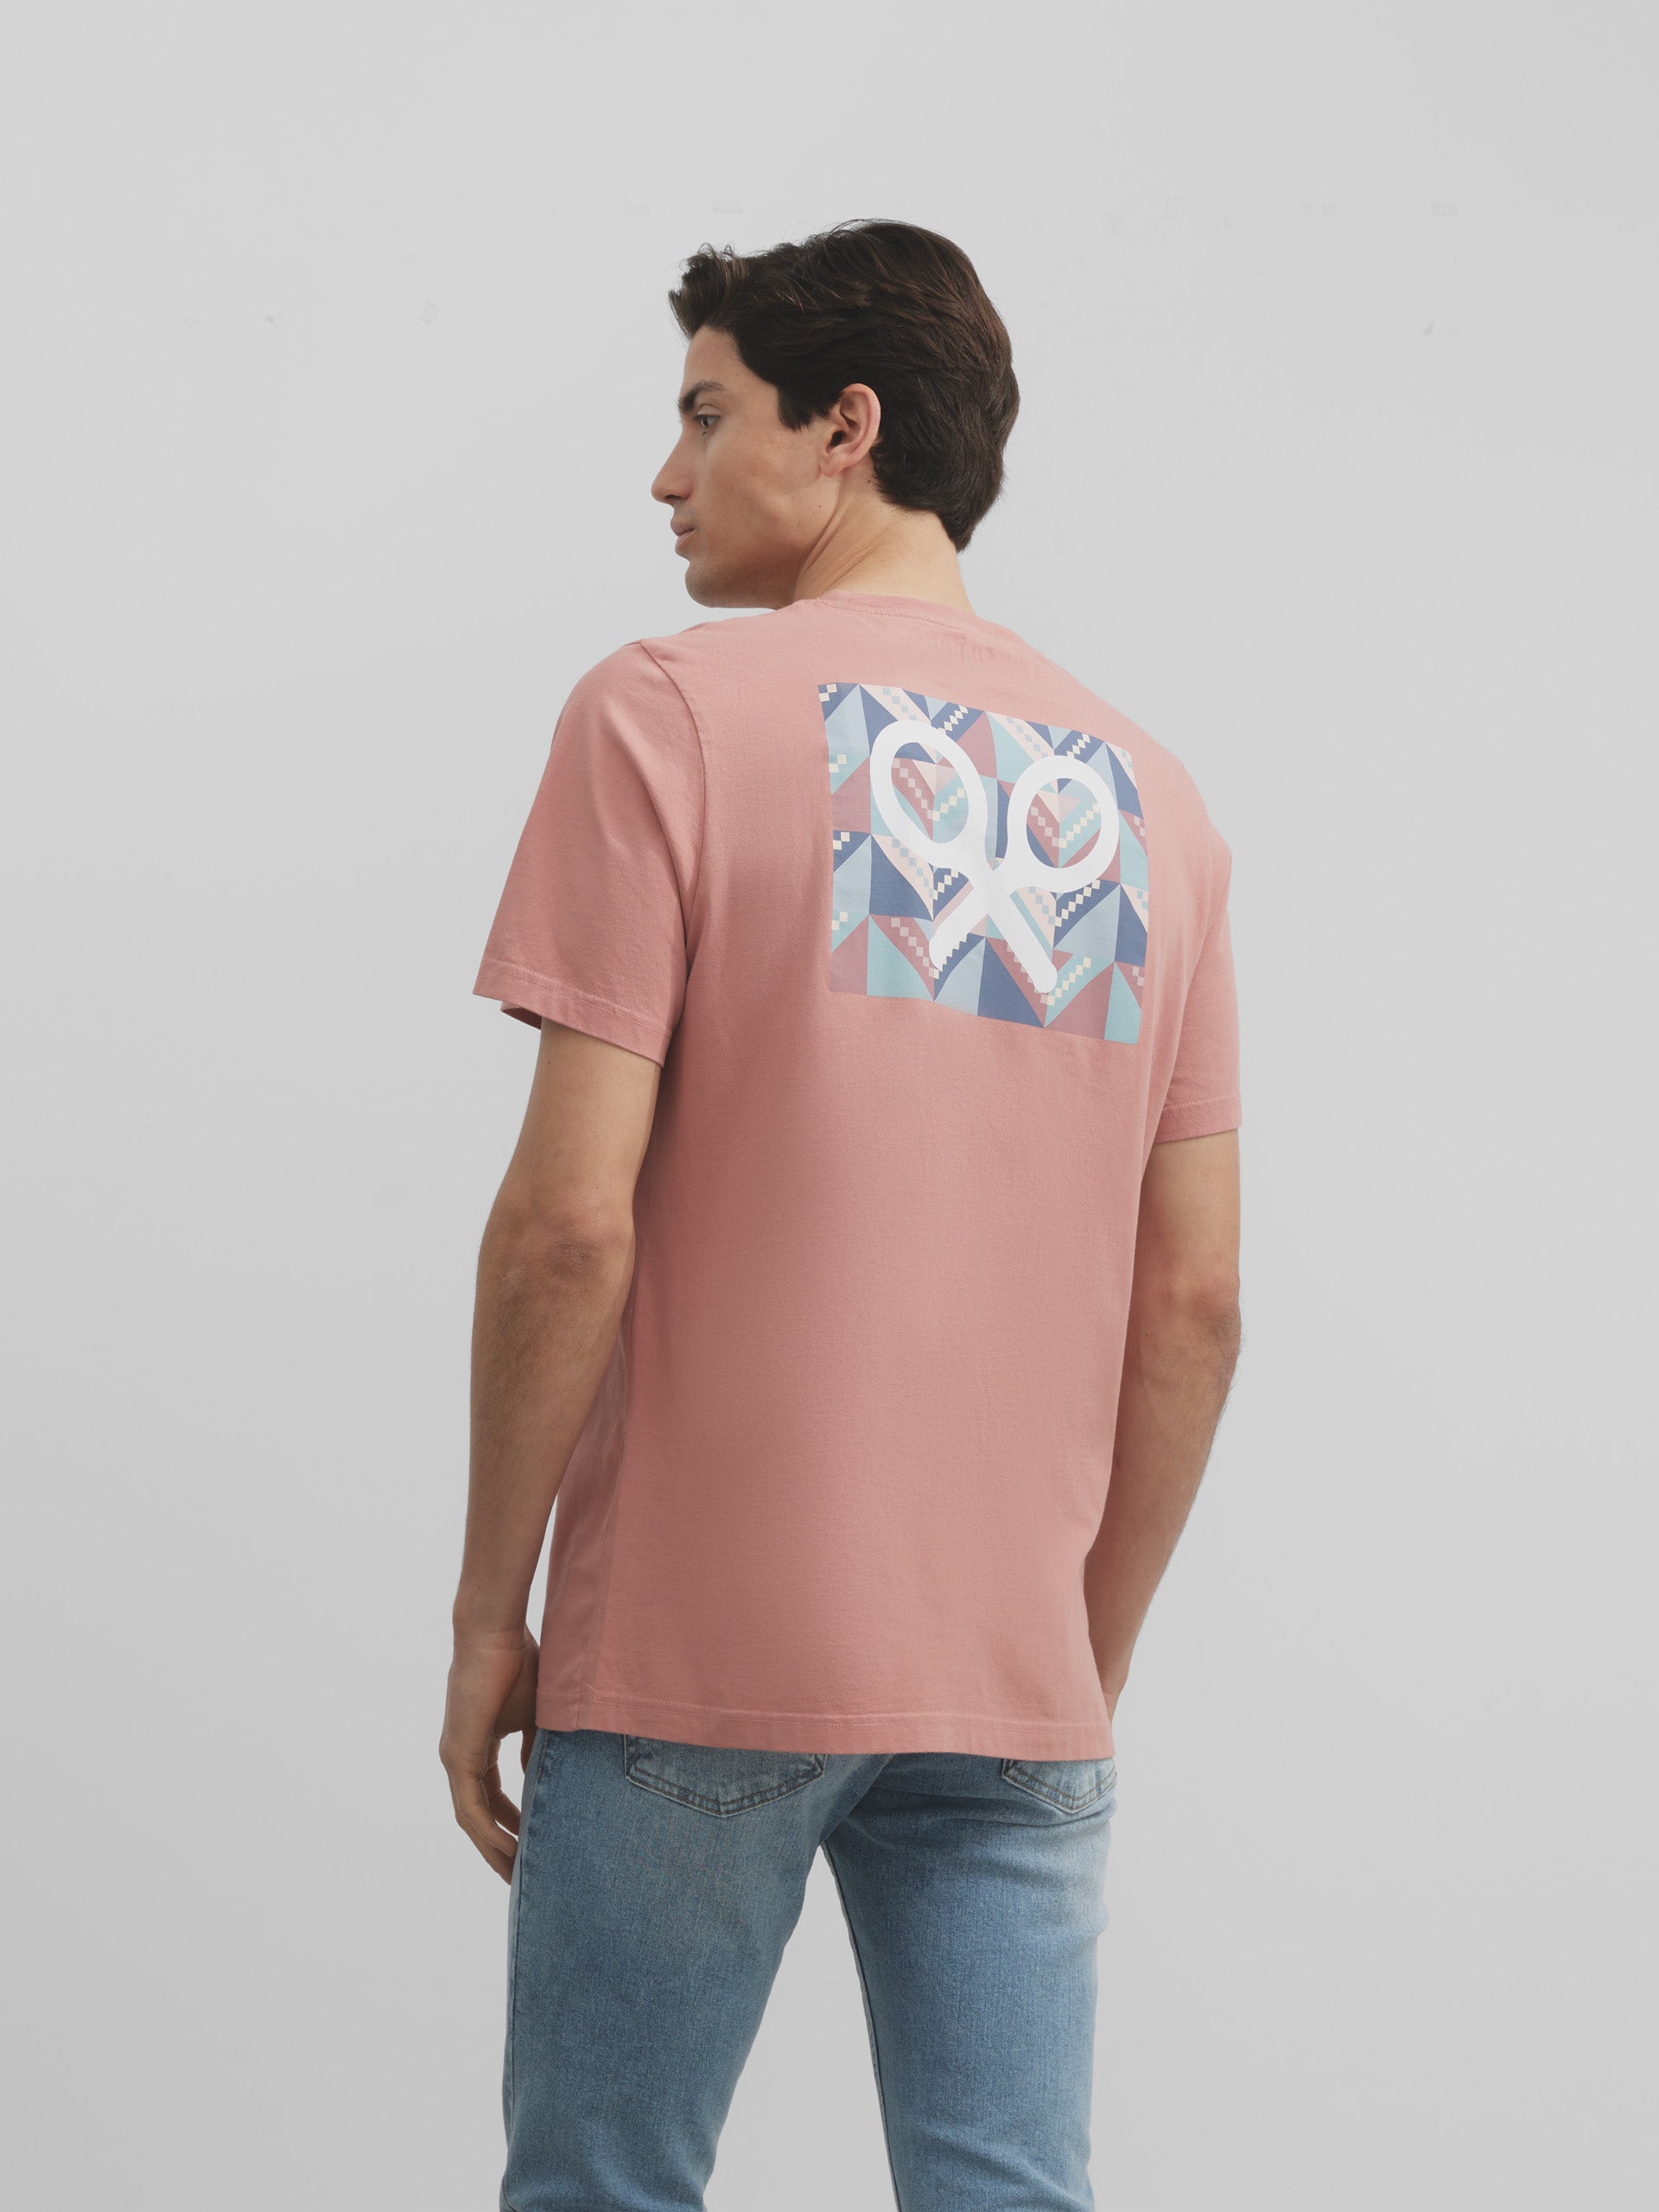 Coral geometric racket t-shirt